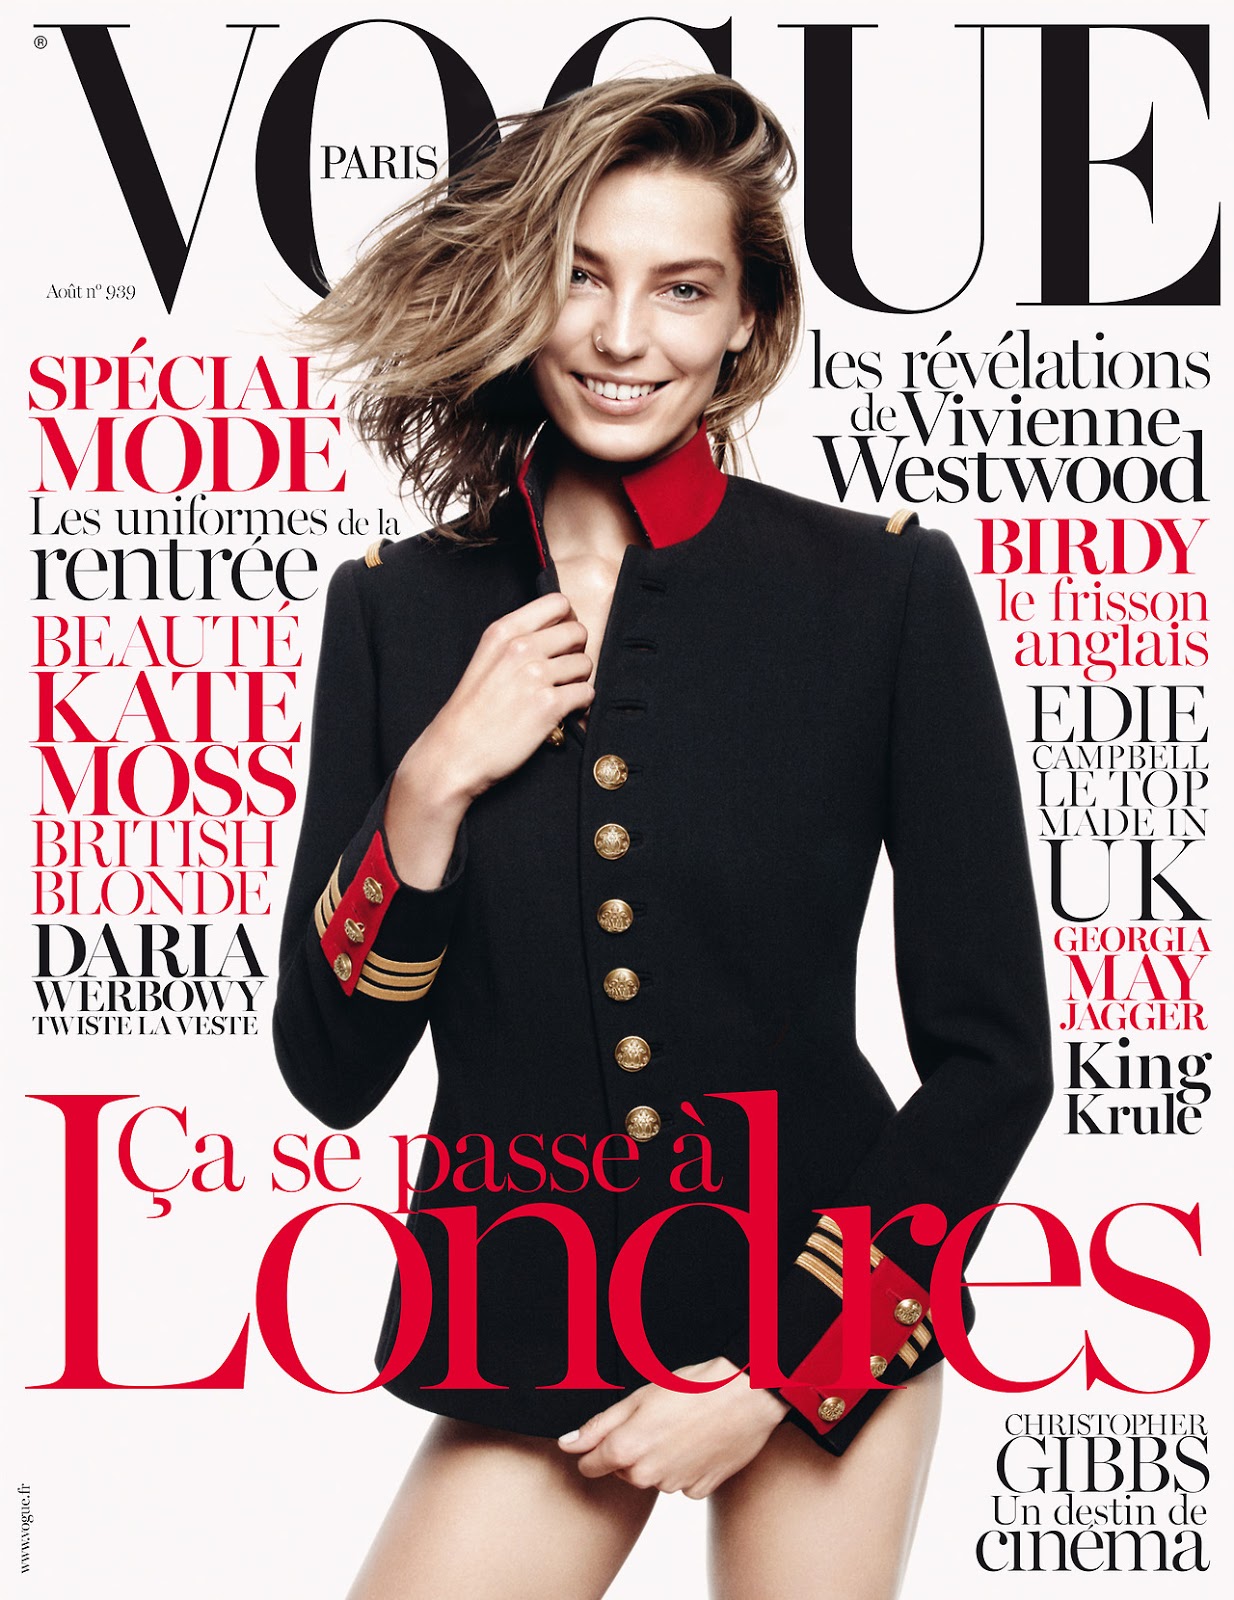 The Daria Files: Cover Star : Vogue Paris August 2013